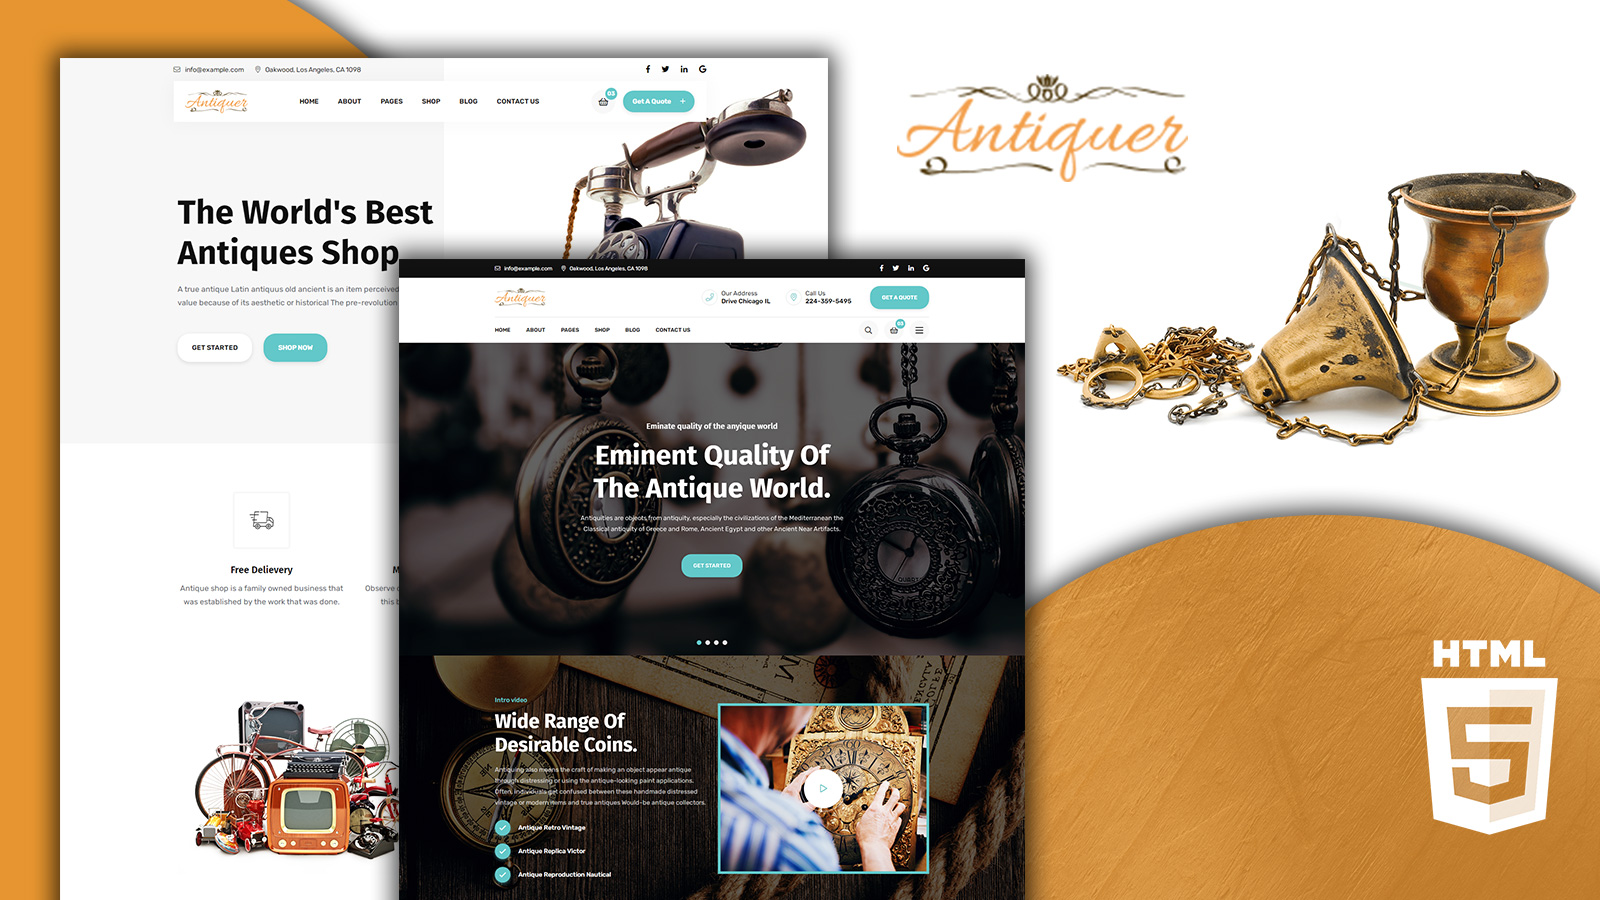 Antiquer Shop Yard Sale HTML5 Website Template